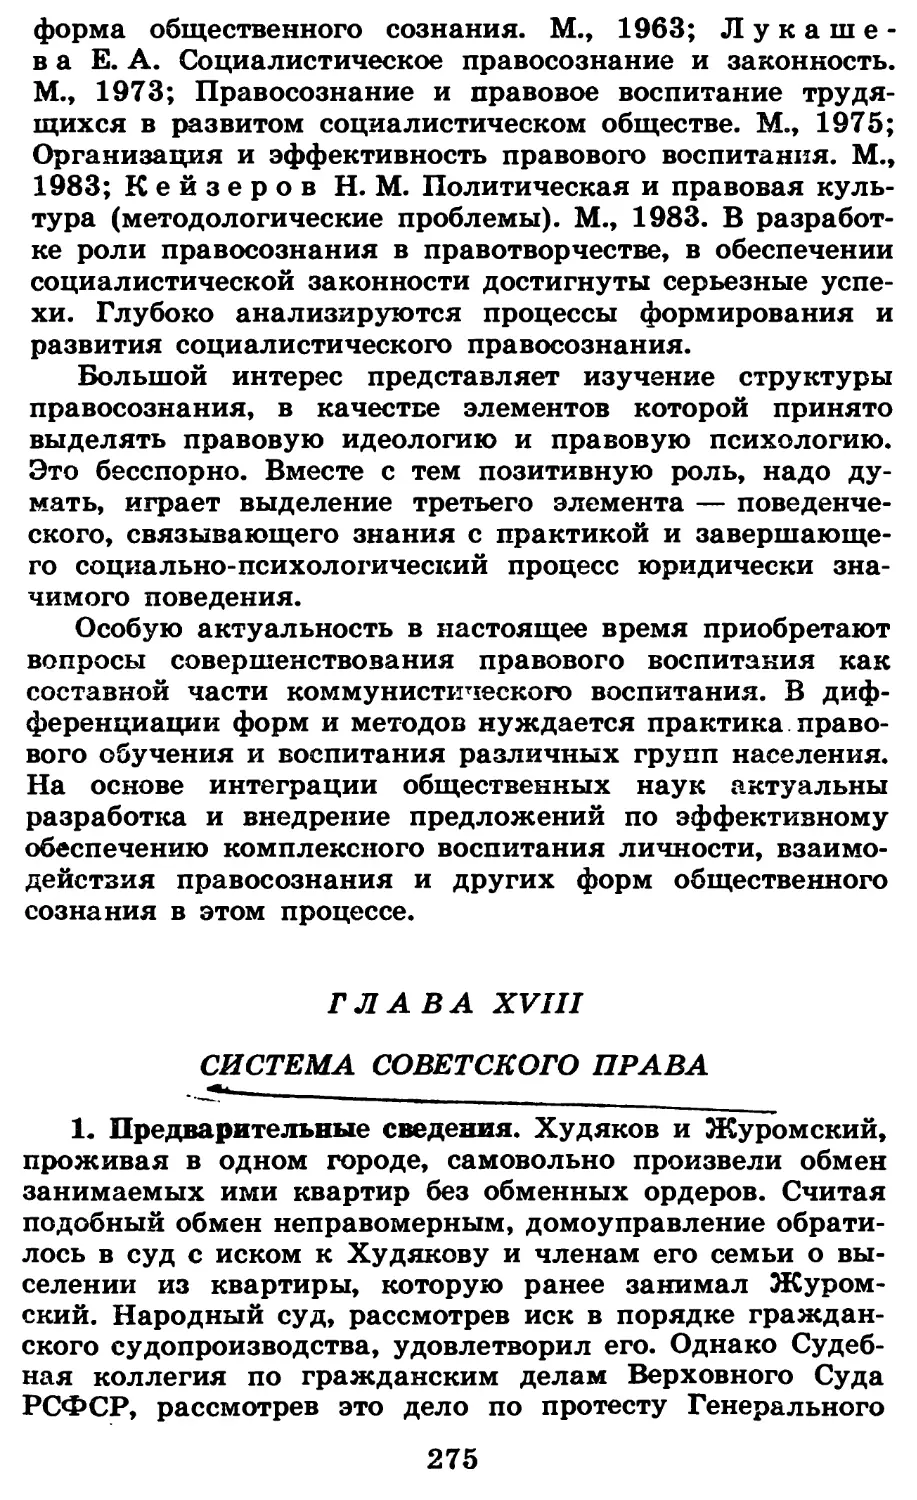 Глава XVIII. Система советского права